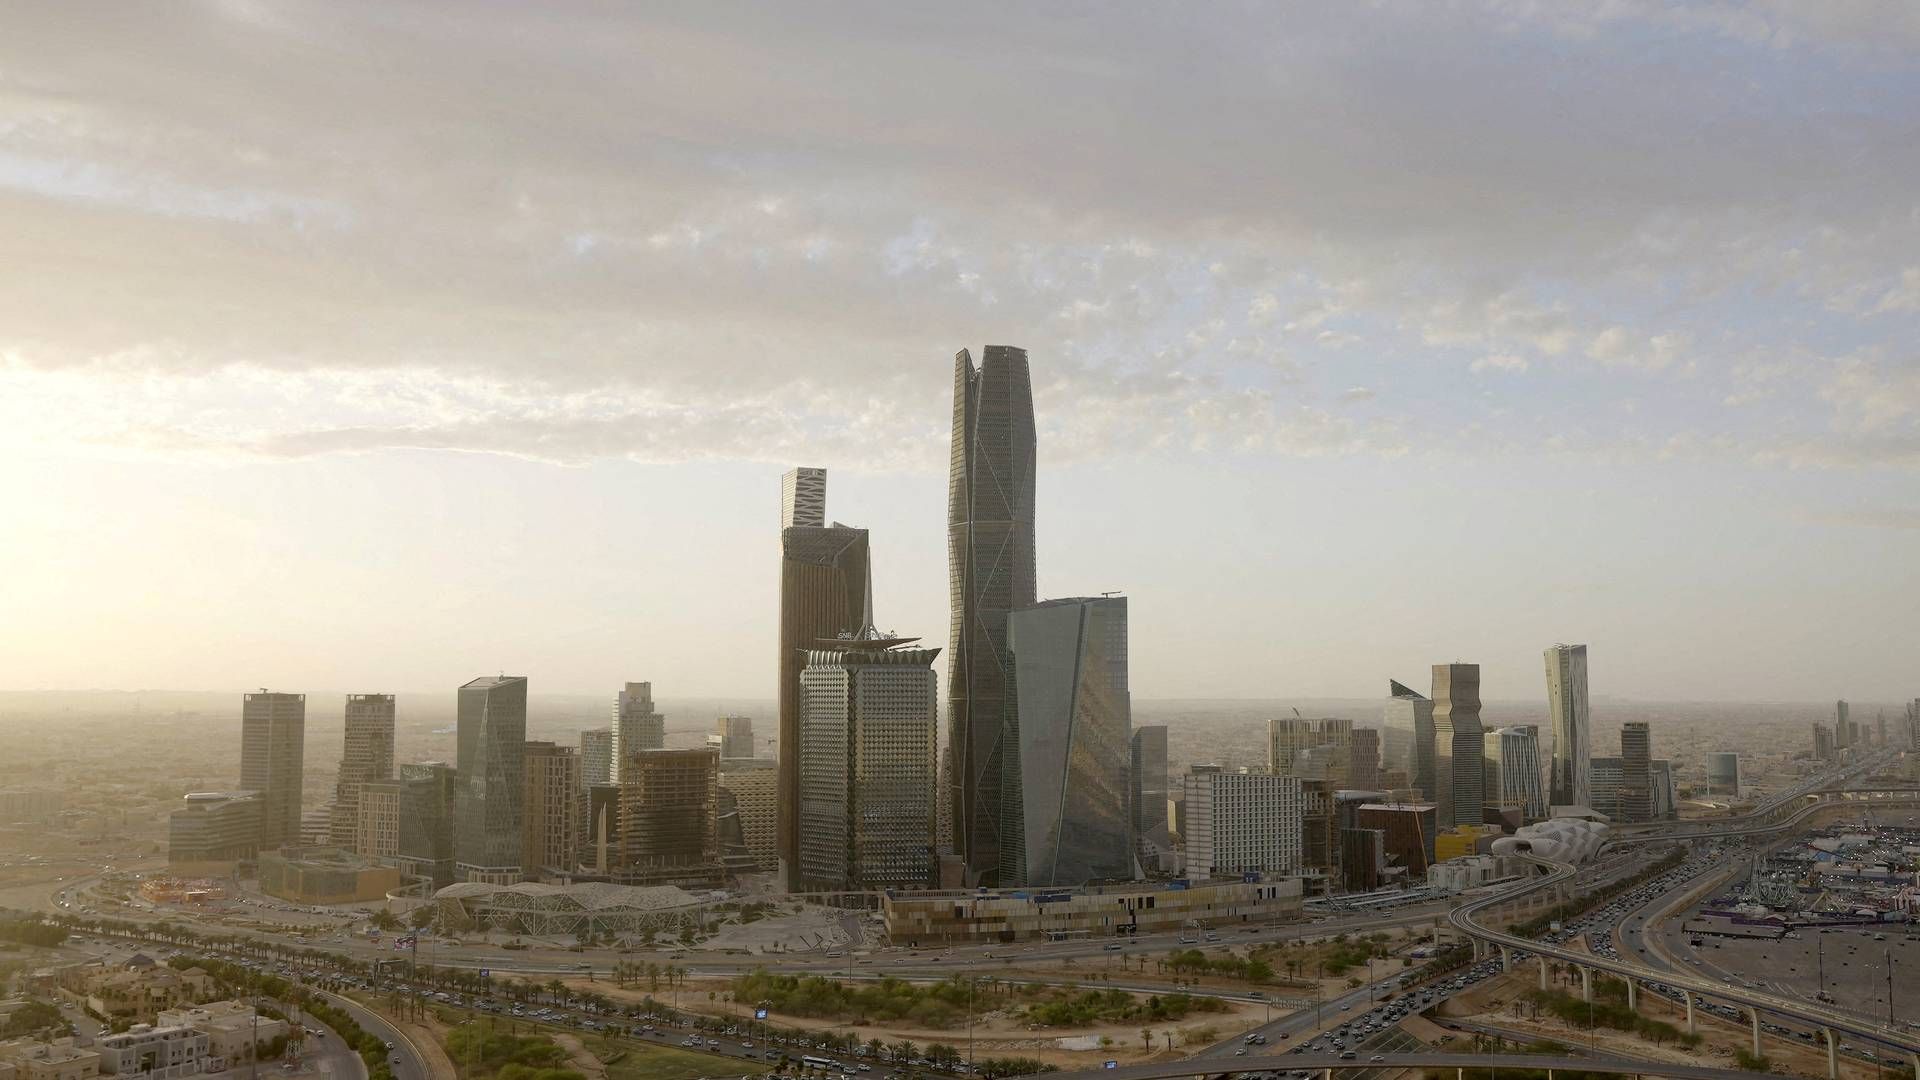 Arkivbillede af skylinen i Riyadh i Saudi-Arabien | Foto: Mohammed Benmansour/Reuters/Ritzau Scanpix